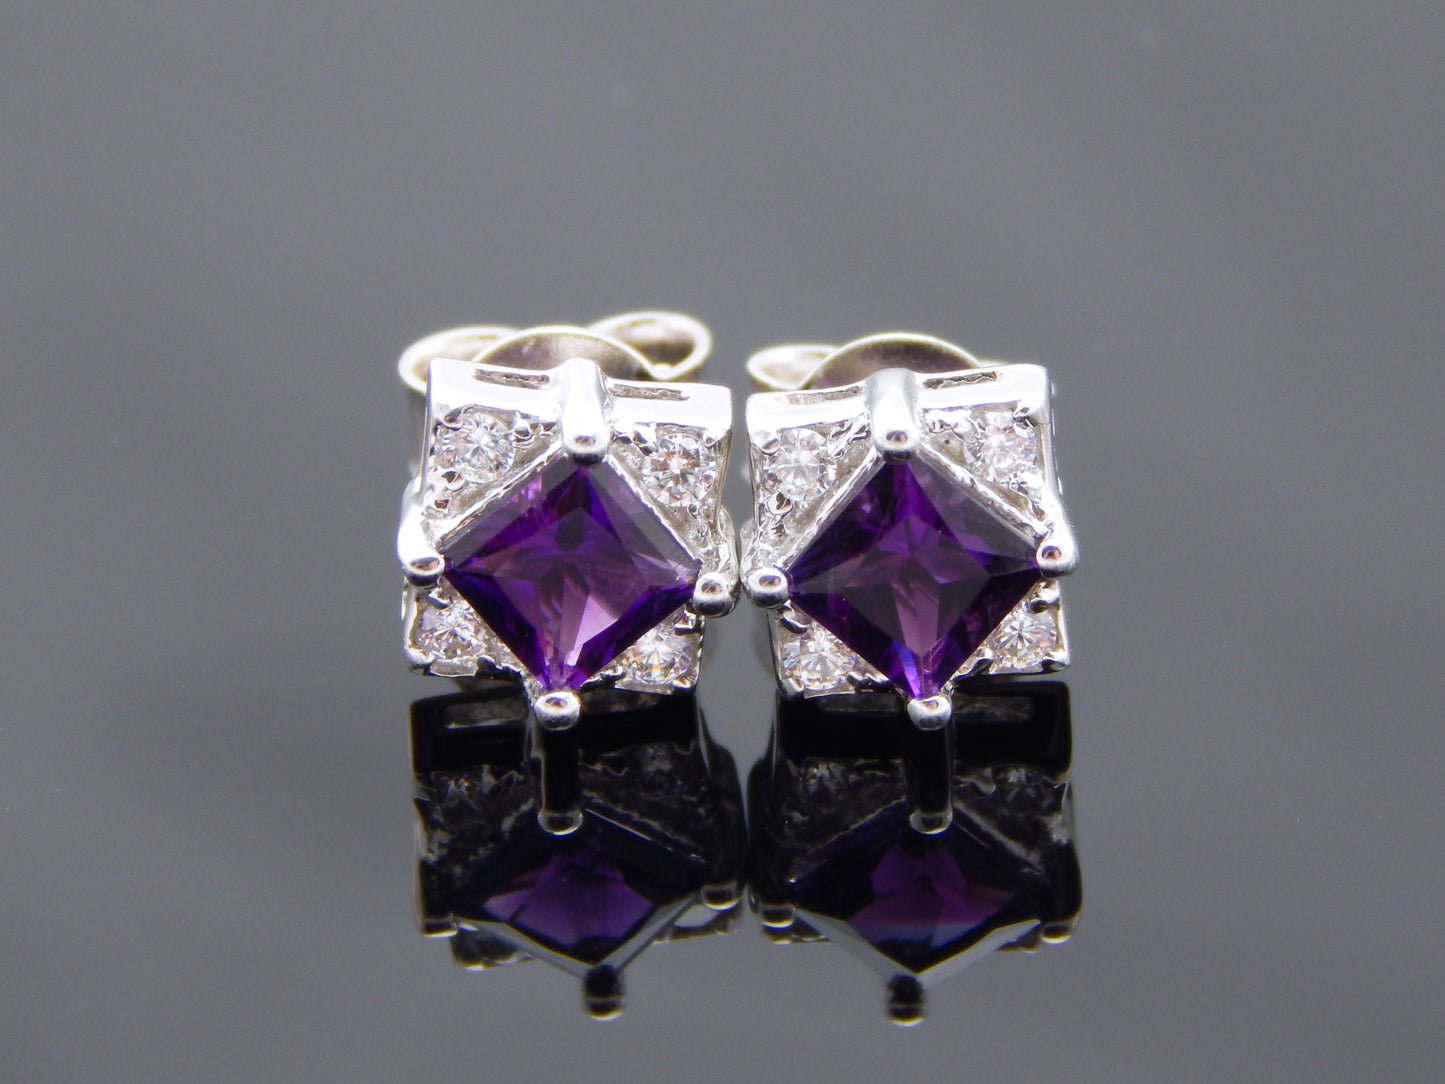 Genuine Purple Amethyst Cushion Cut Stud Earrings in 925 Sterling Silver